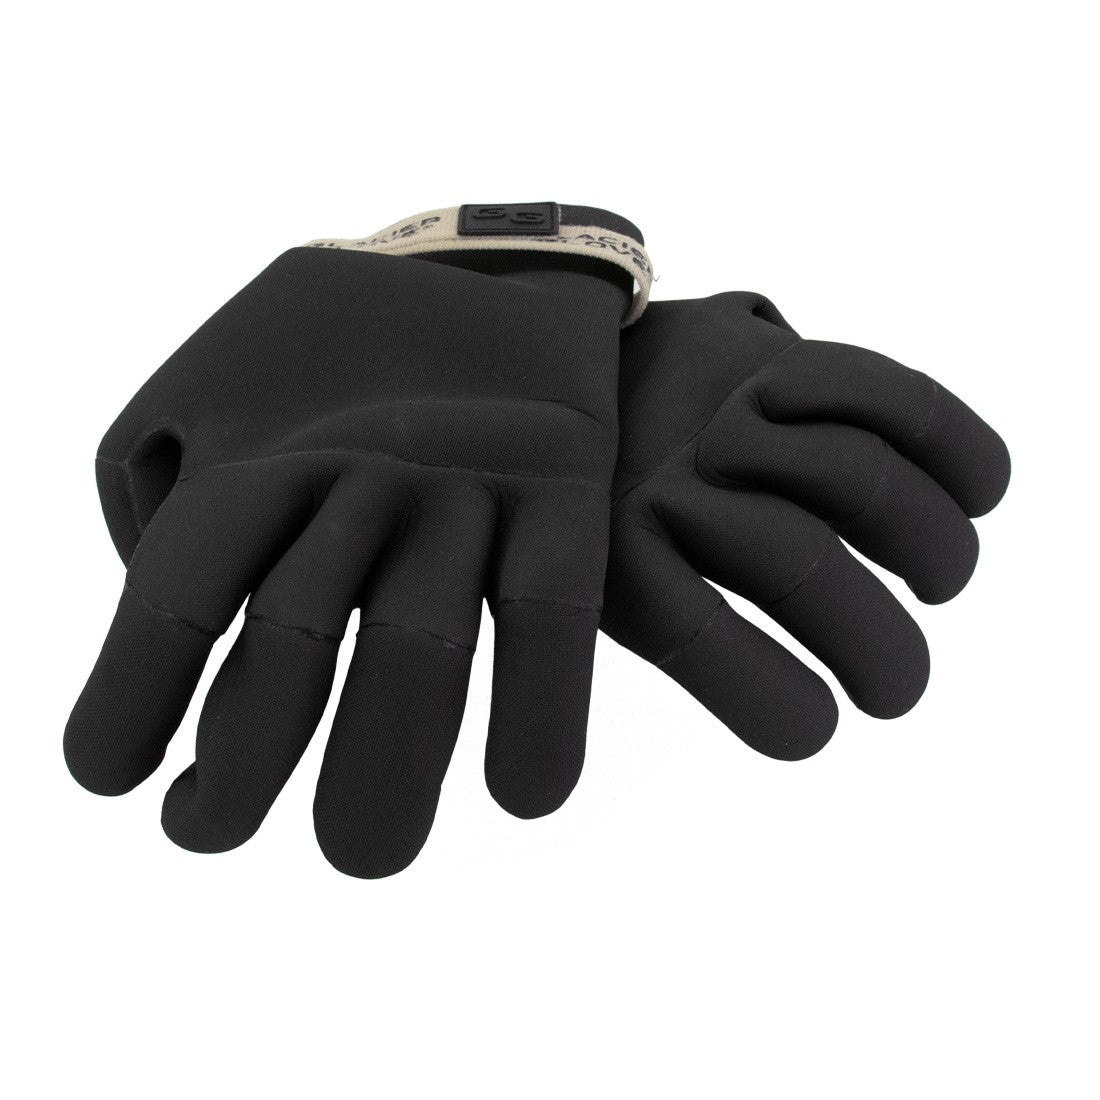 Glacier Lightweight Pro Tactical Glove Black XL